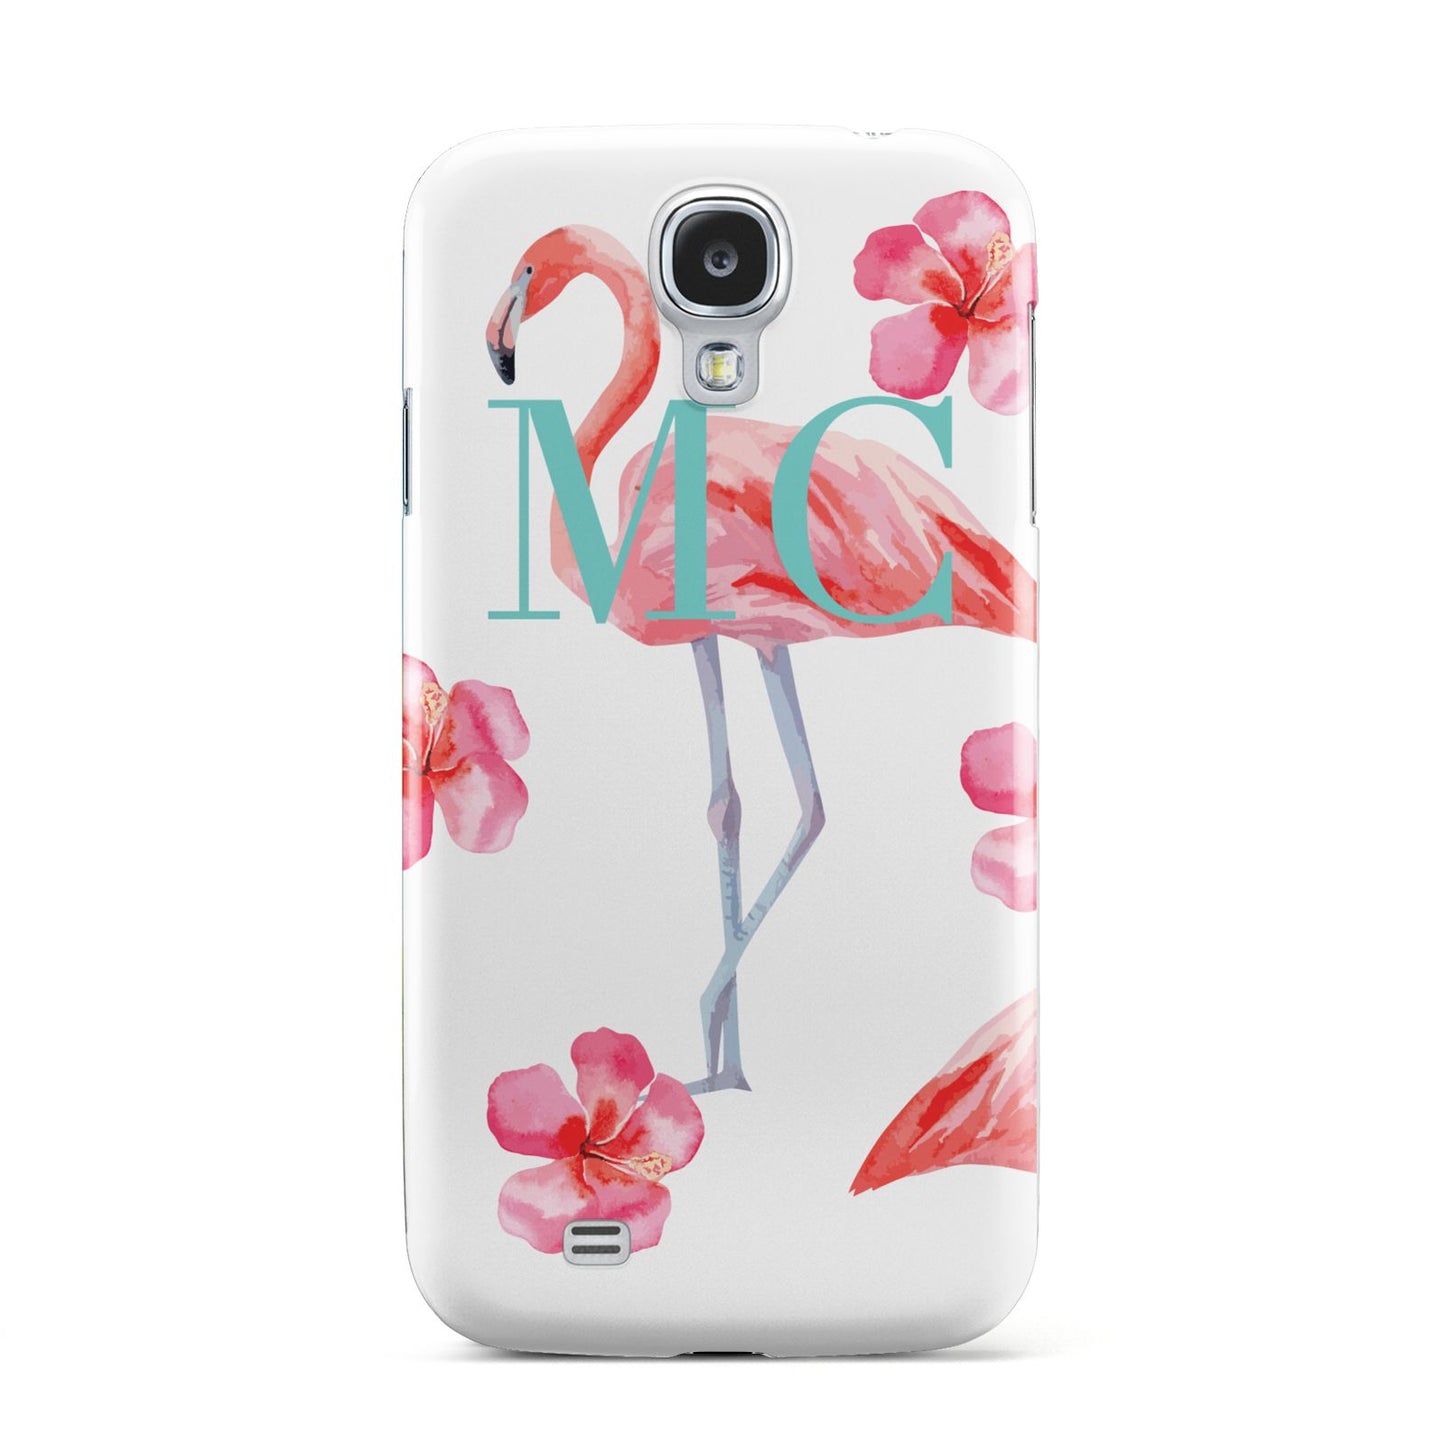 Personalised Initials Flamingo 3 Samsung Galaxy S4 Case